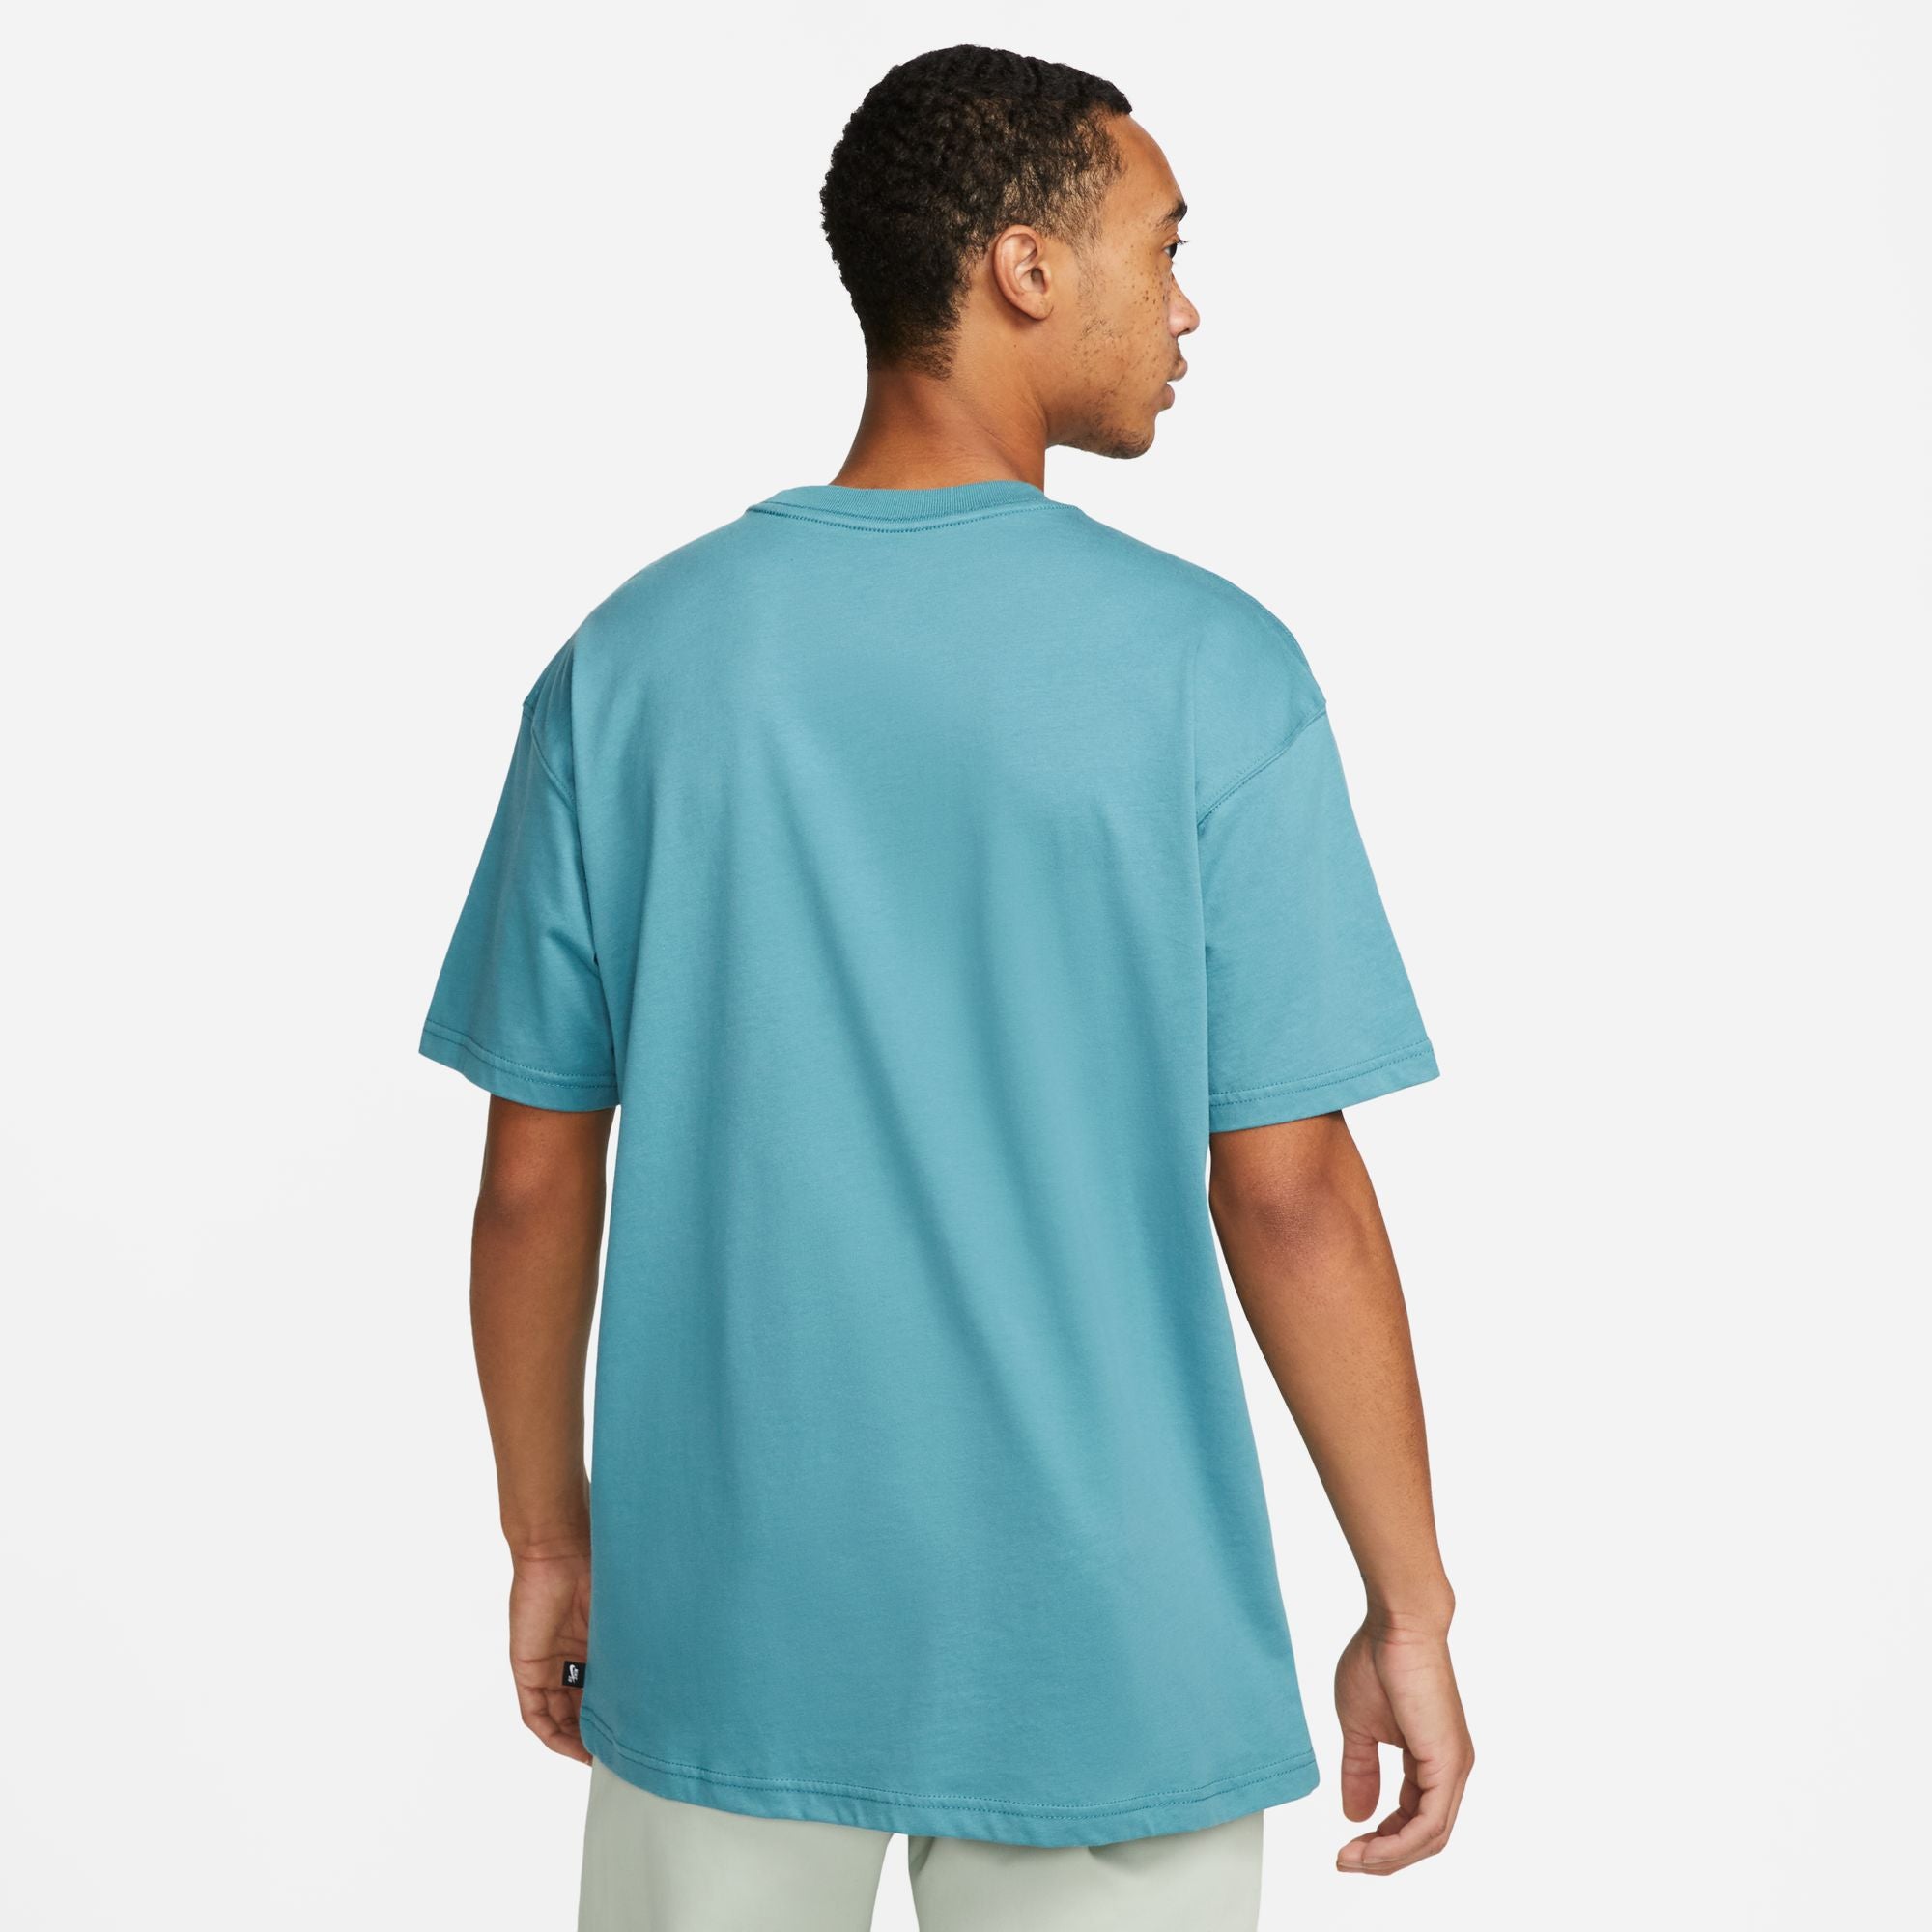 Mineral Teal Magcard Nike SB T-Shirt Back